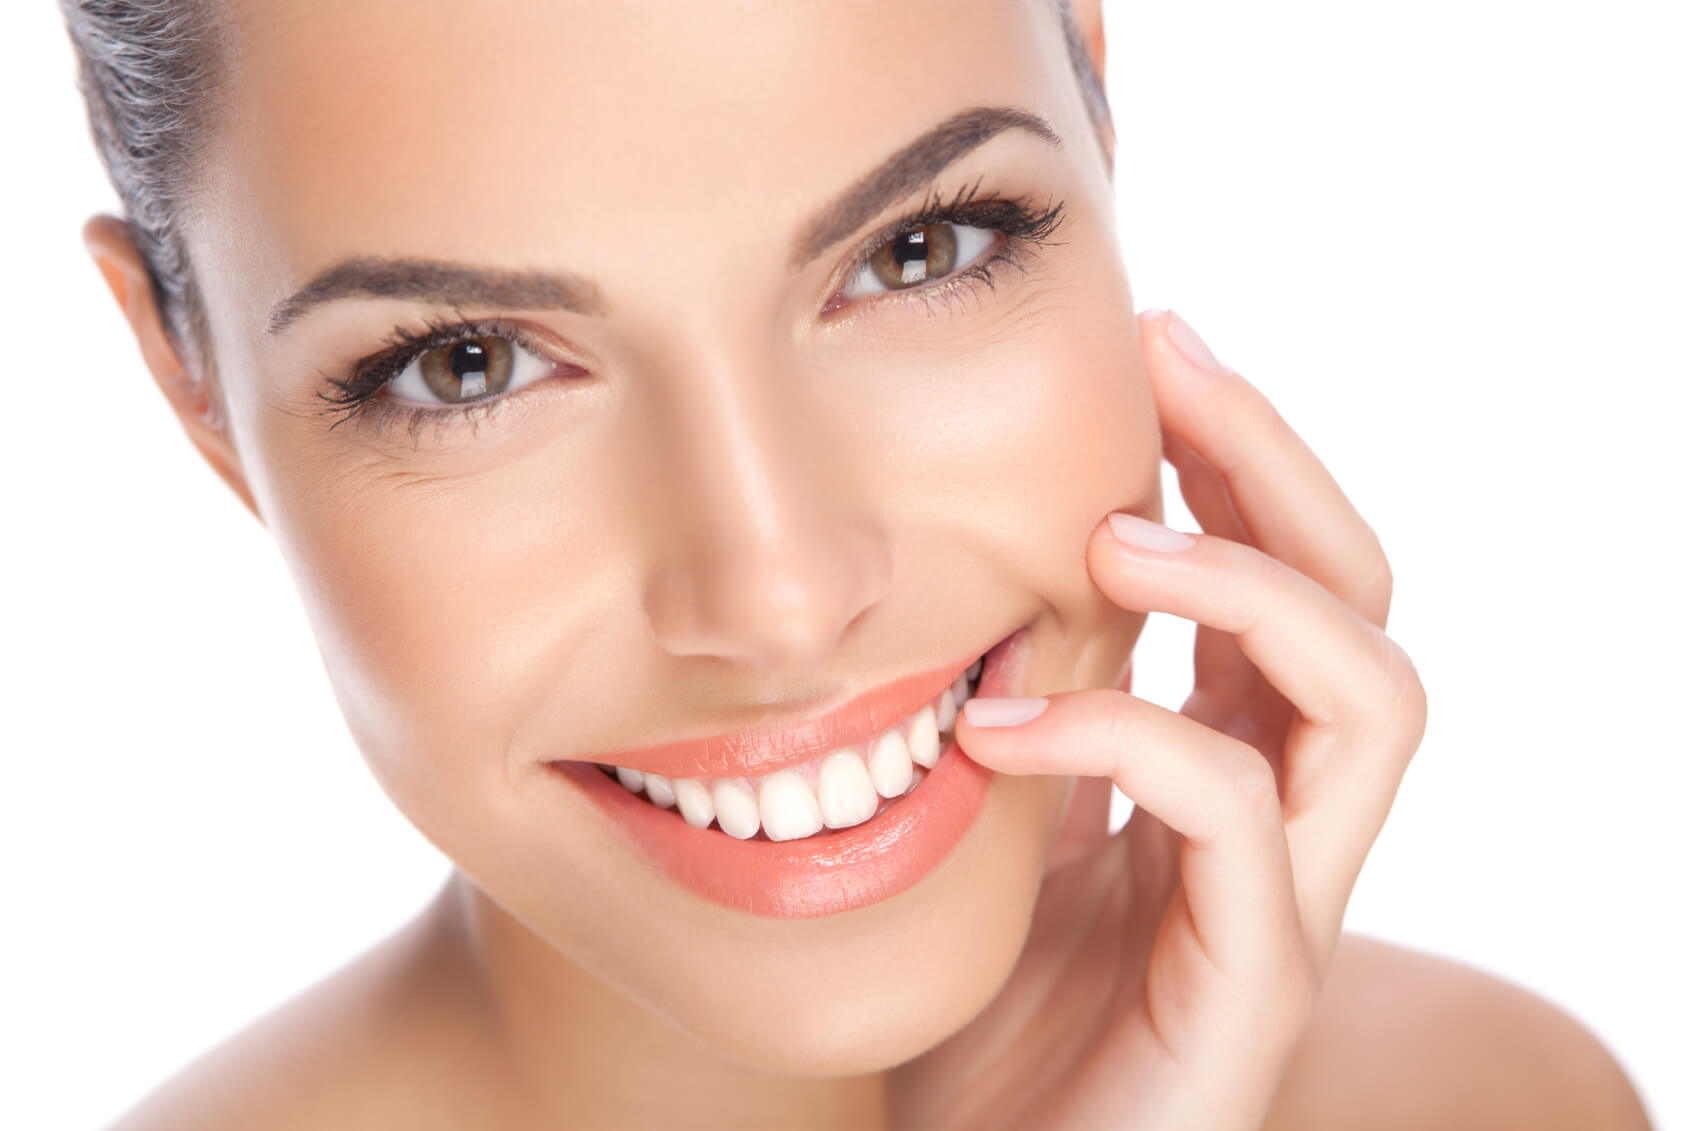 does a dental implant help prevent gum disease